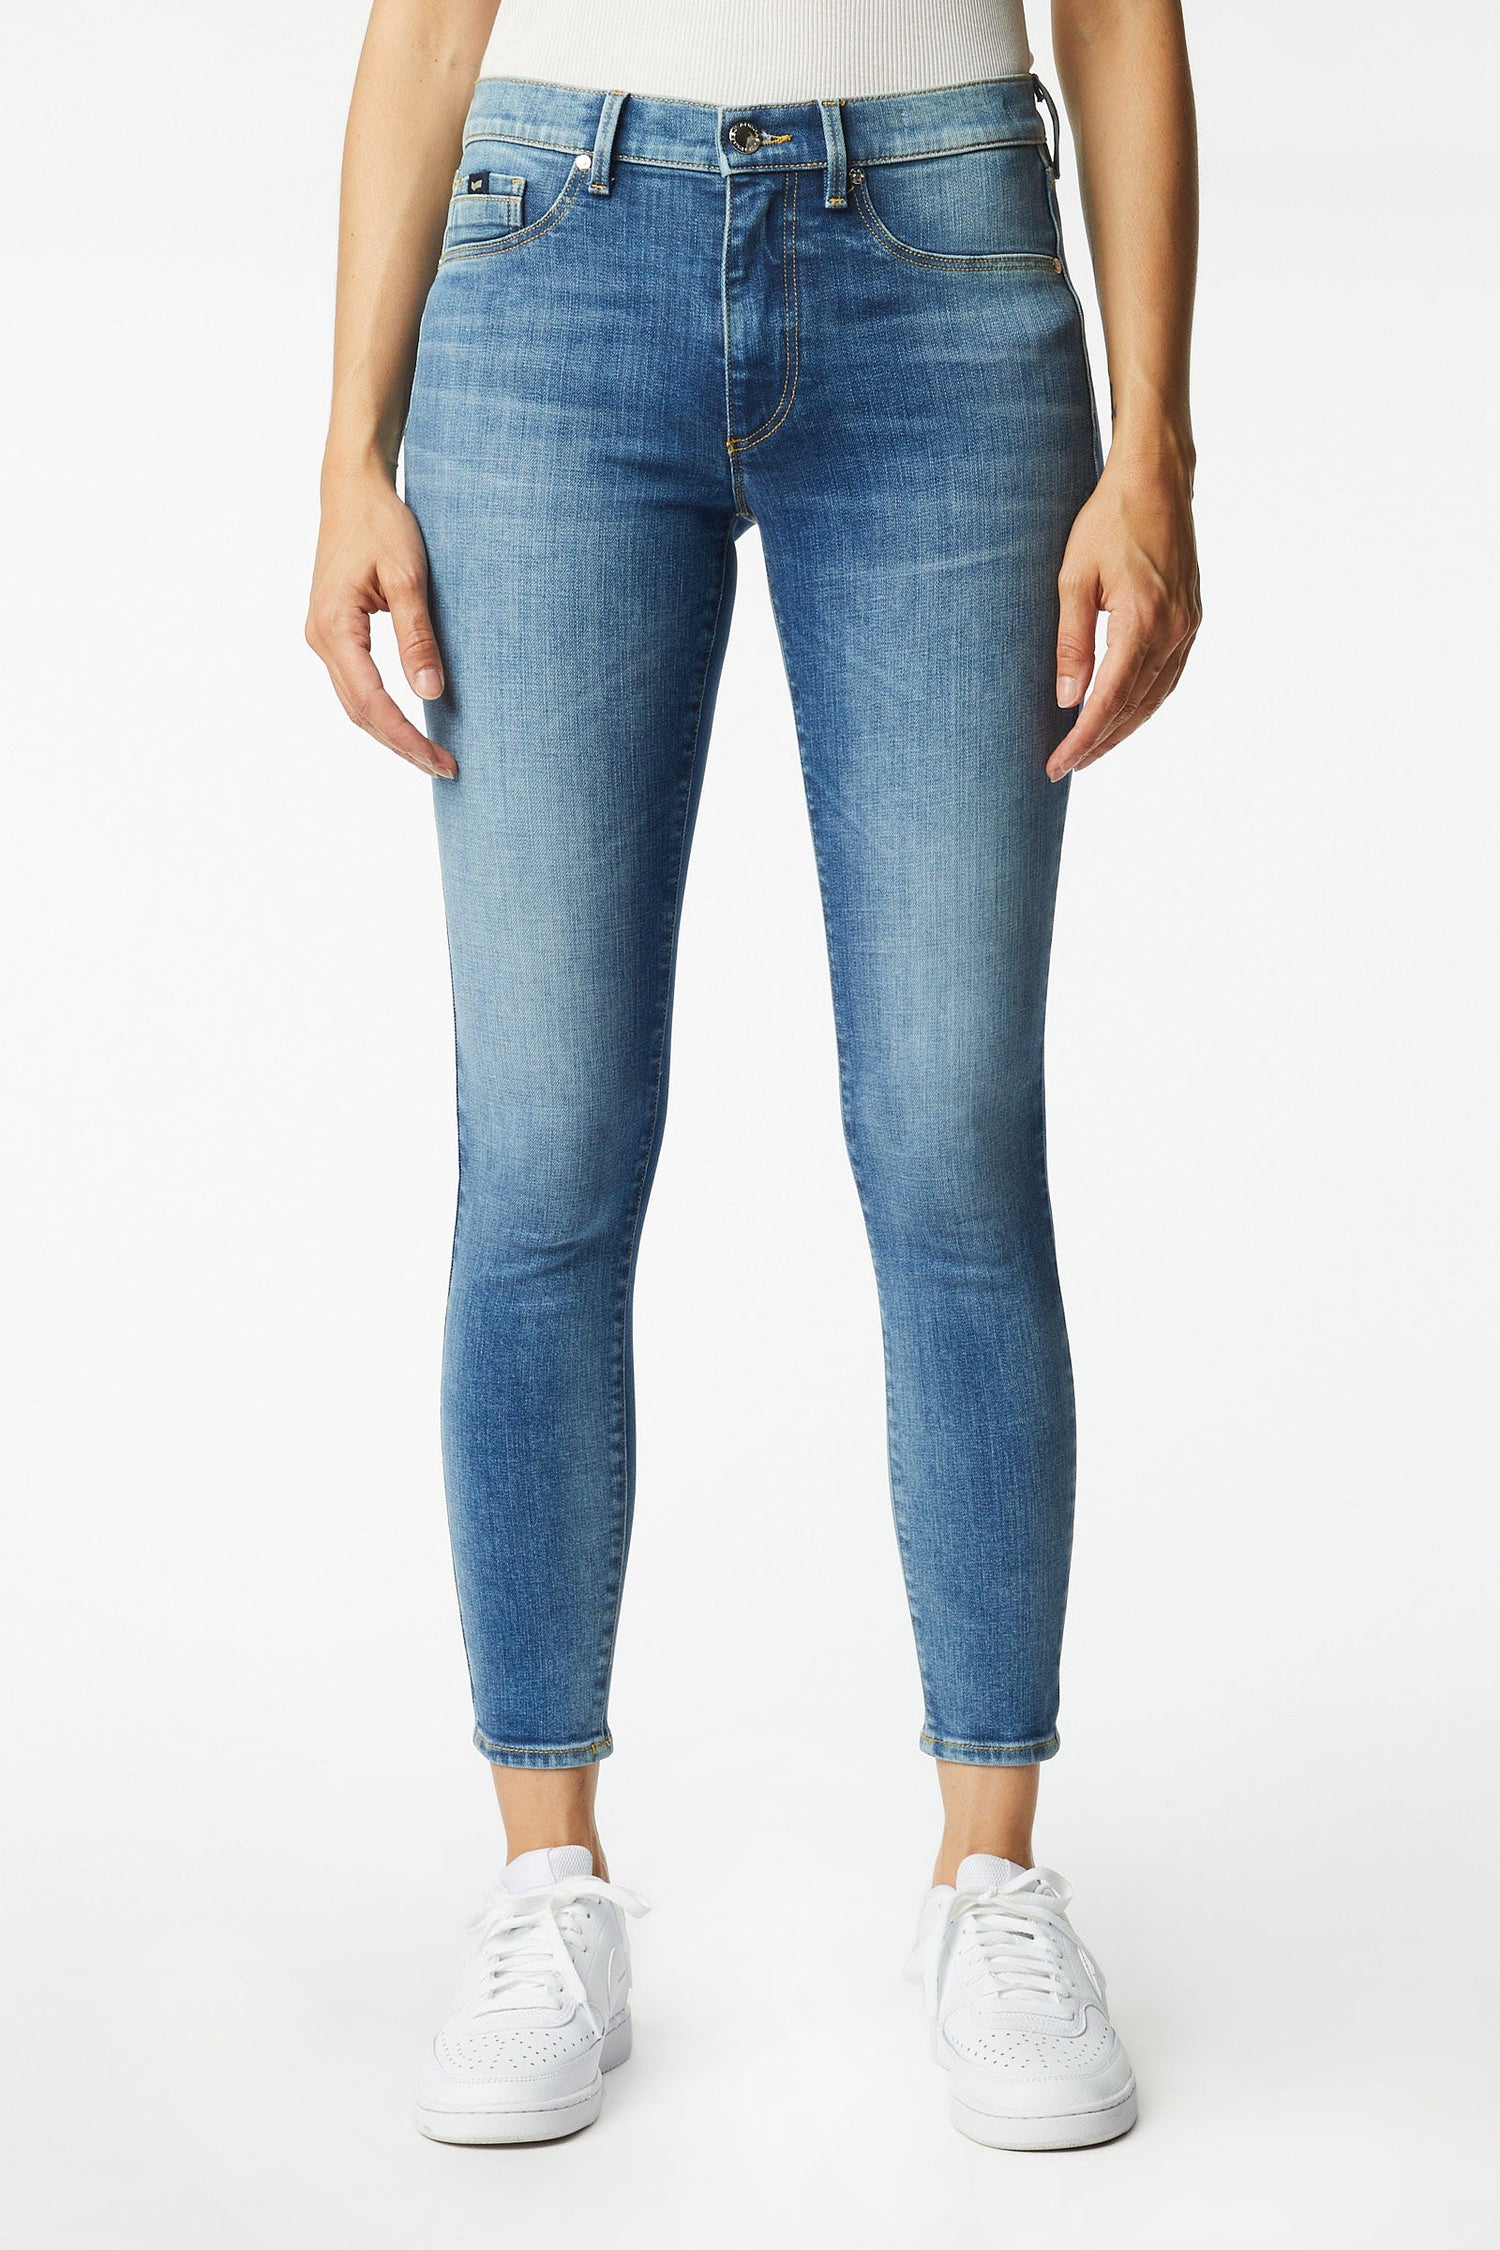 Women's Skinny and Super Skinny Denim Jeans - Gas Jeans